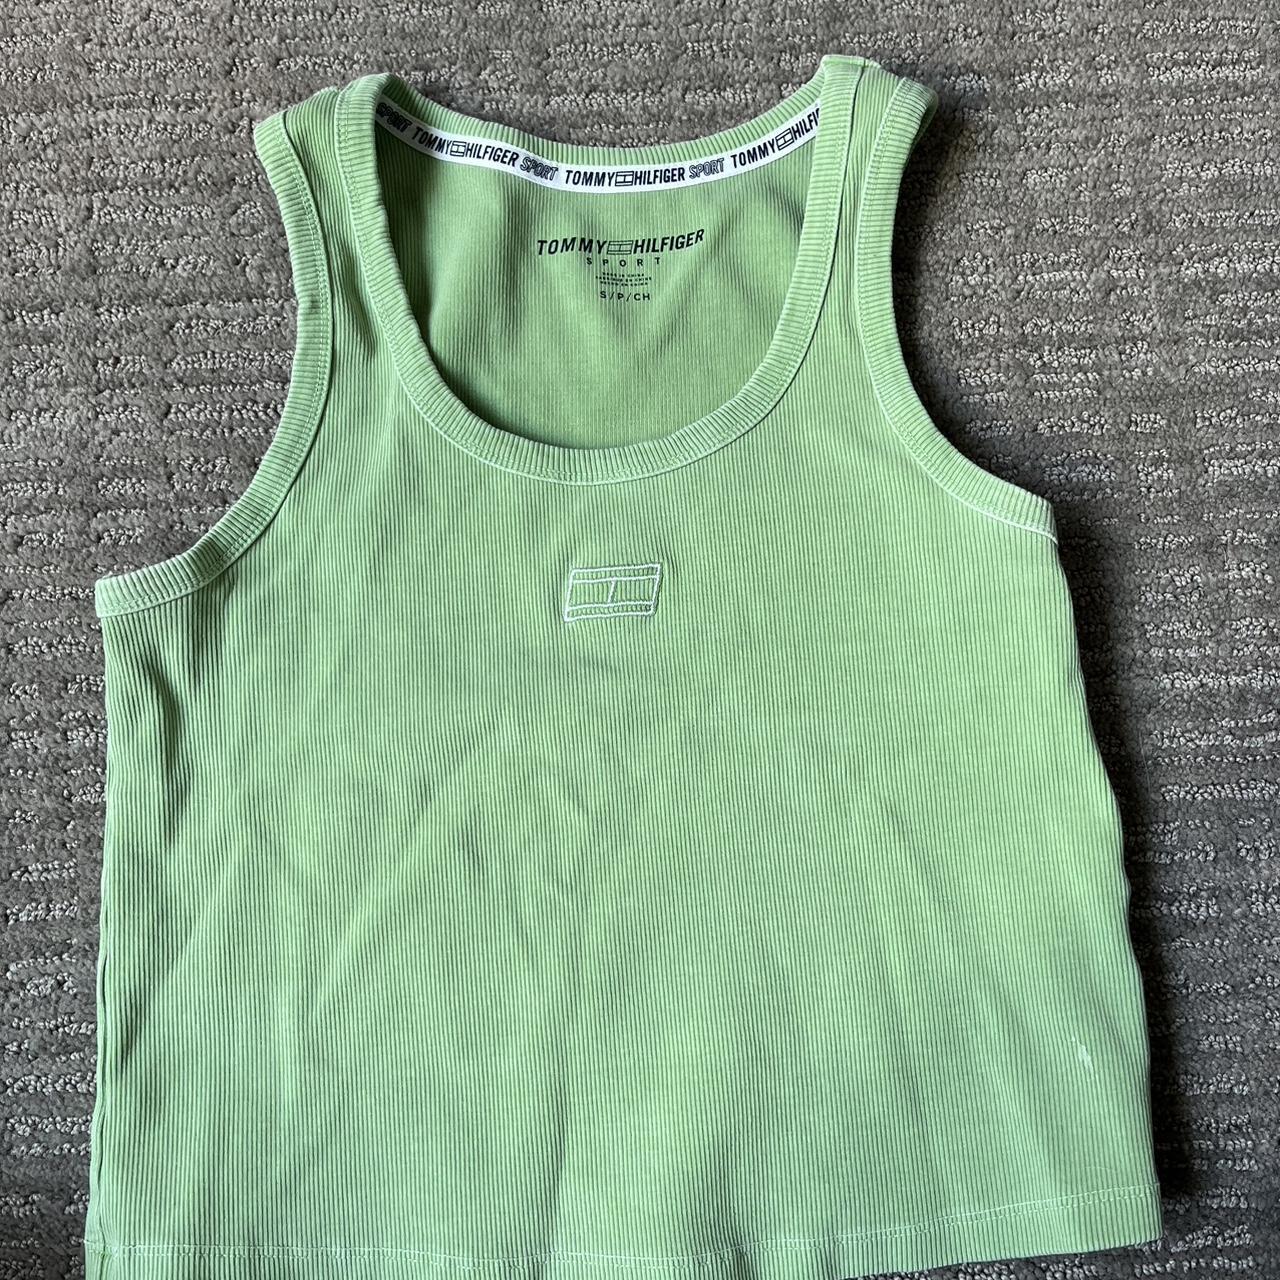 Tommy Hilfiger Women's Green Vest | Depop